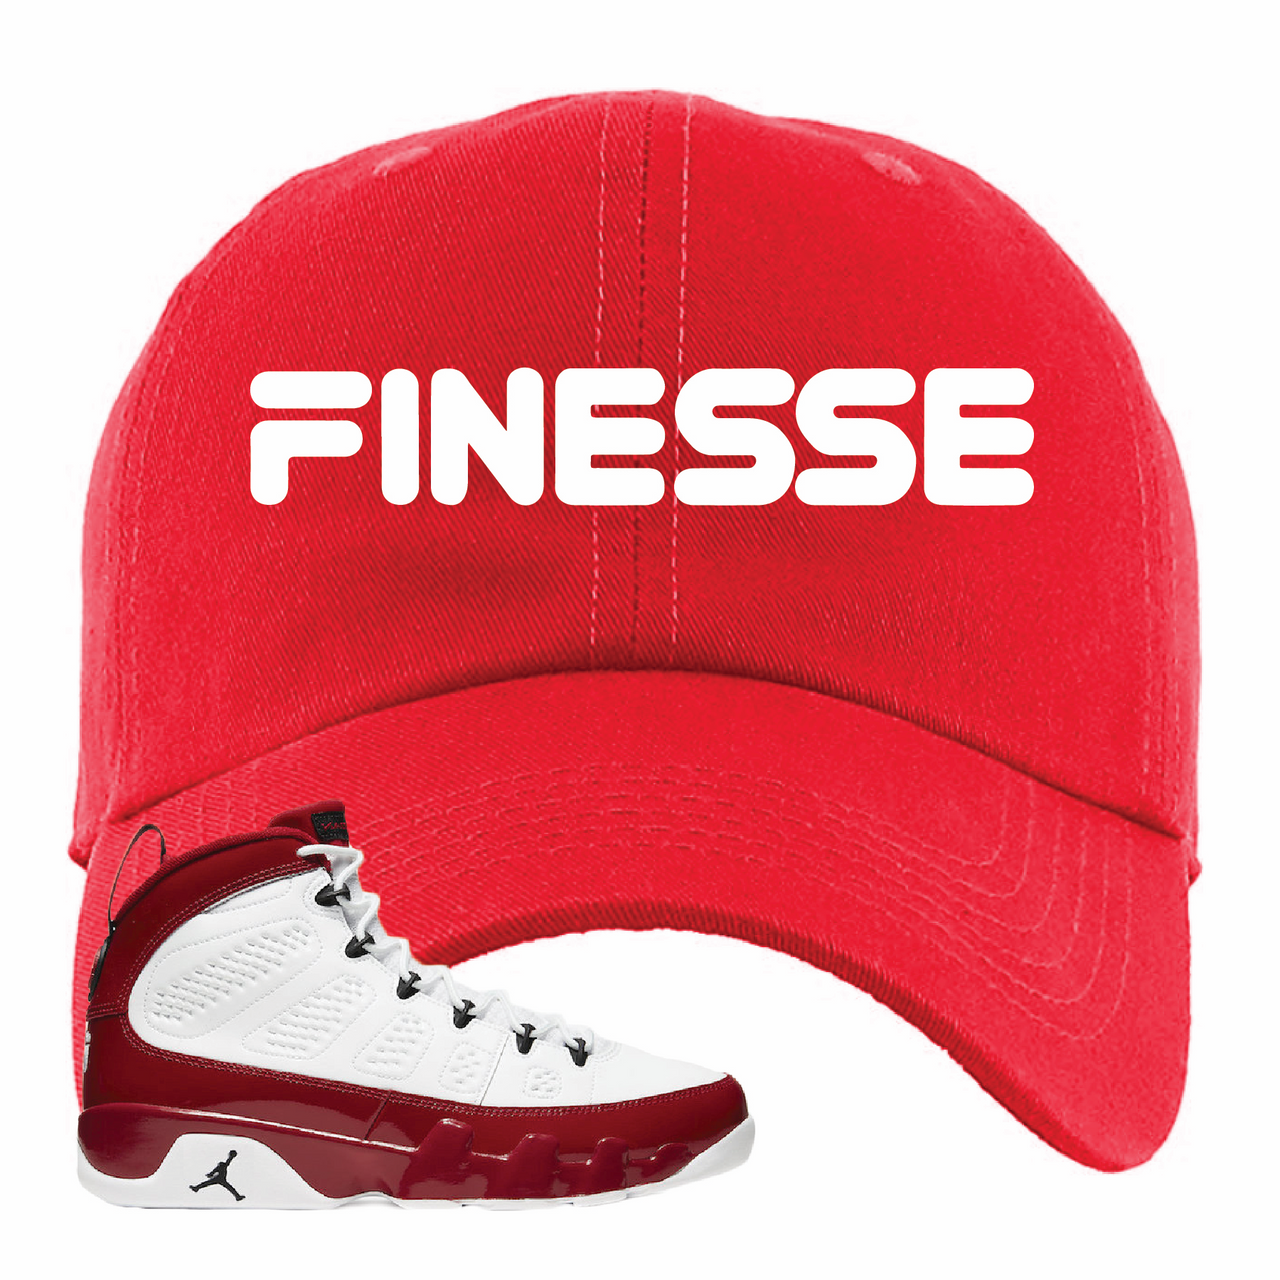 Jordan 9 Gym Red Finesse Red Sneaker Hook Up Dad Hat